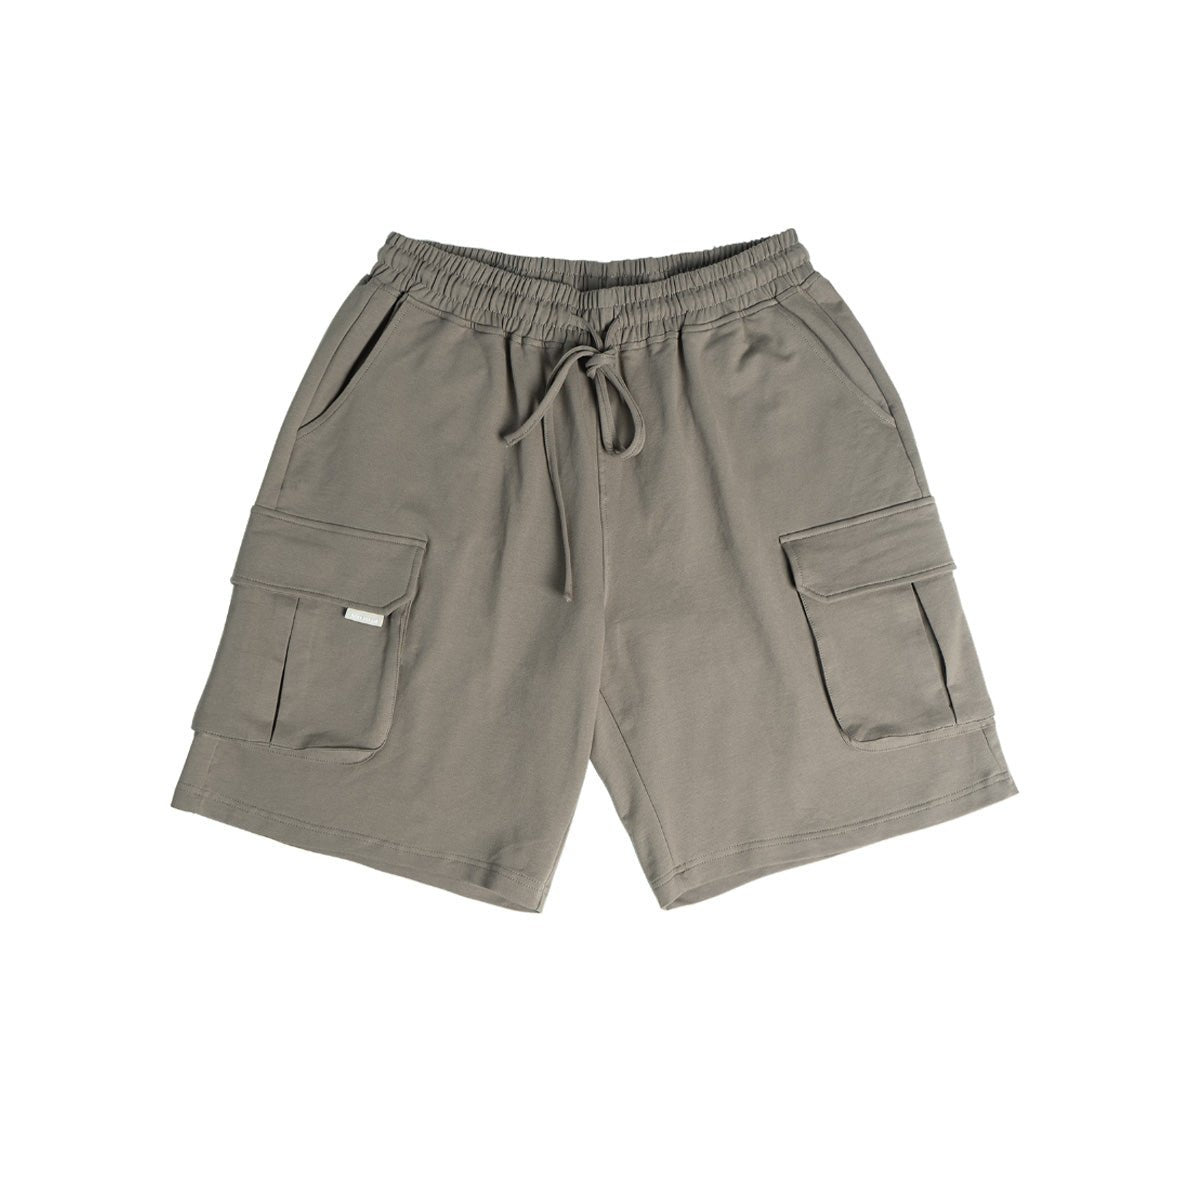 Safari Tech Khaki Utility Shorts - 0cm